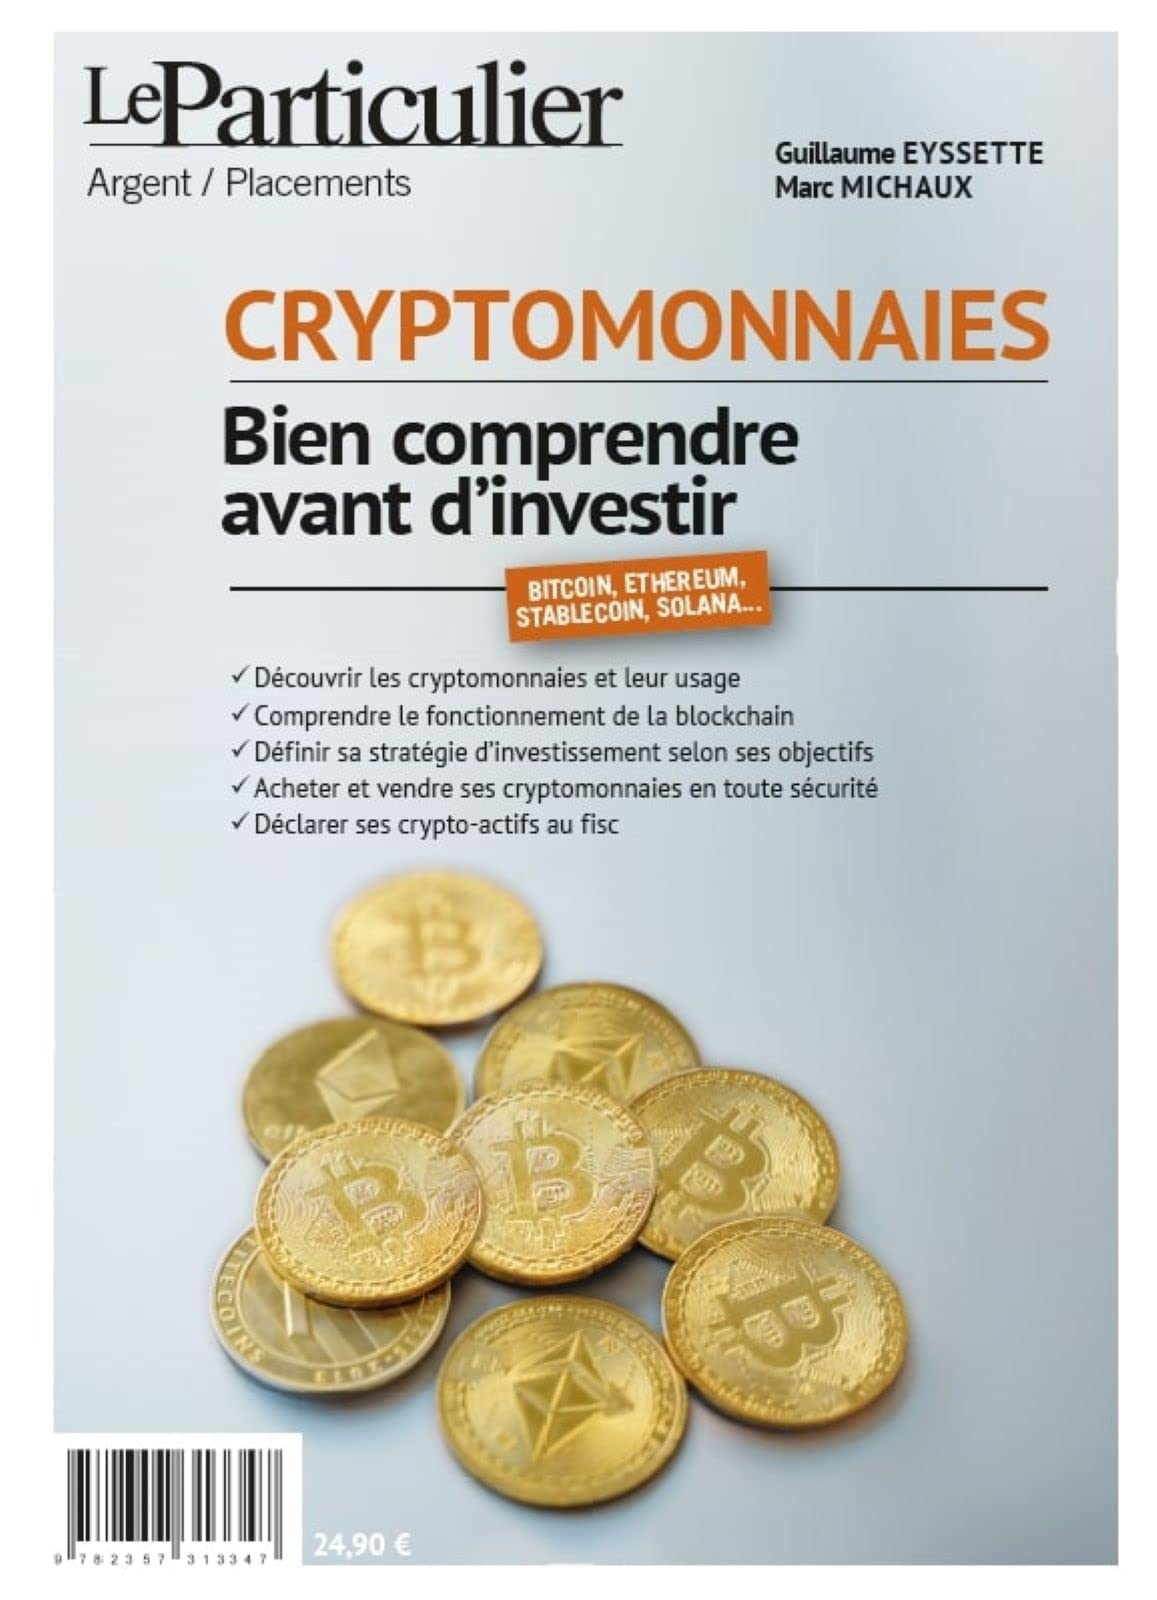 Cryptomonnaies, bien comprendre avant d'investir : bitcoin, Ethereum, stablecoin, Solana...